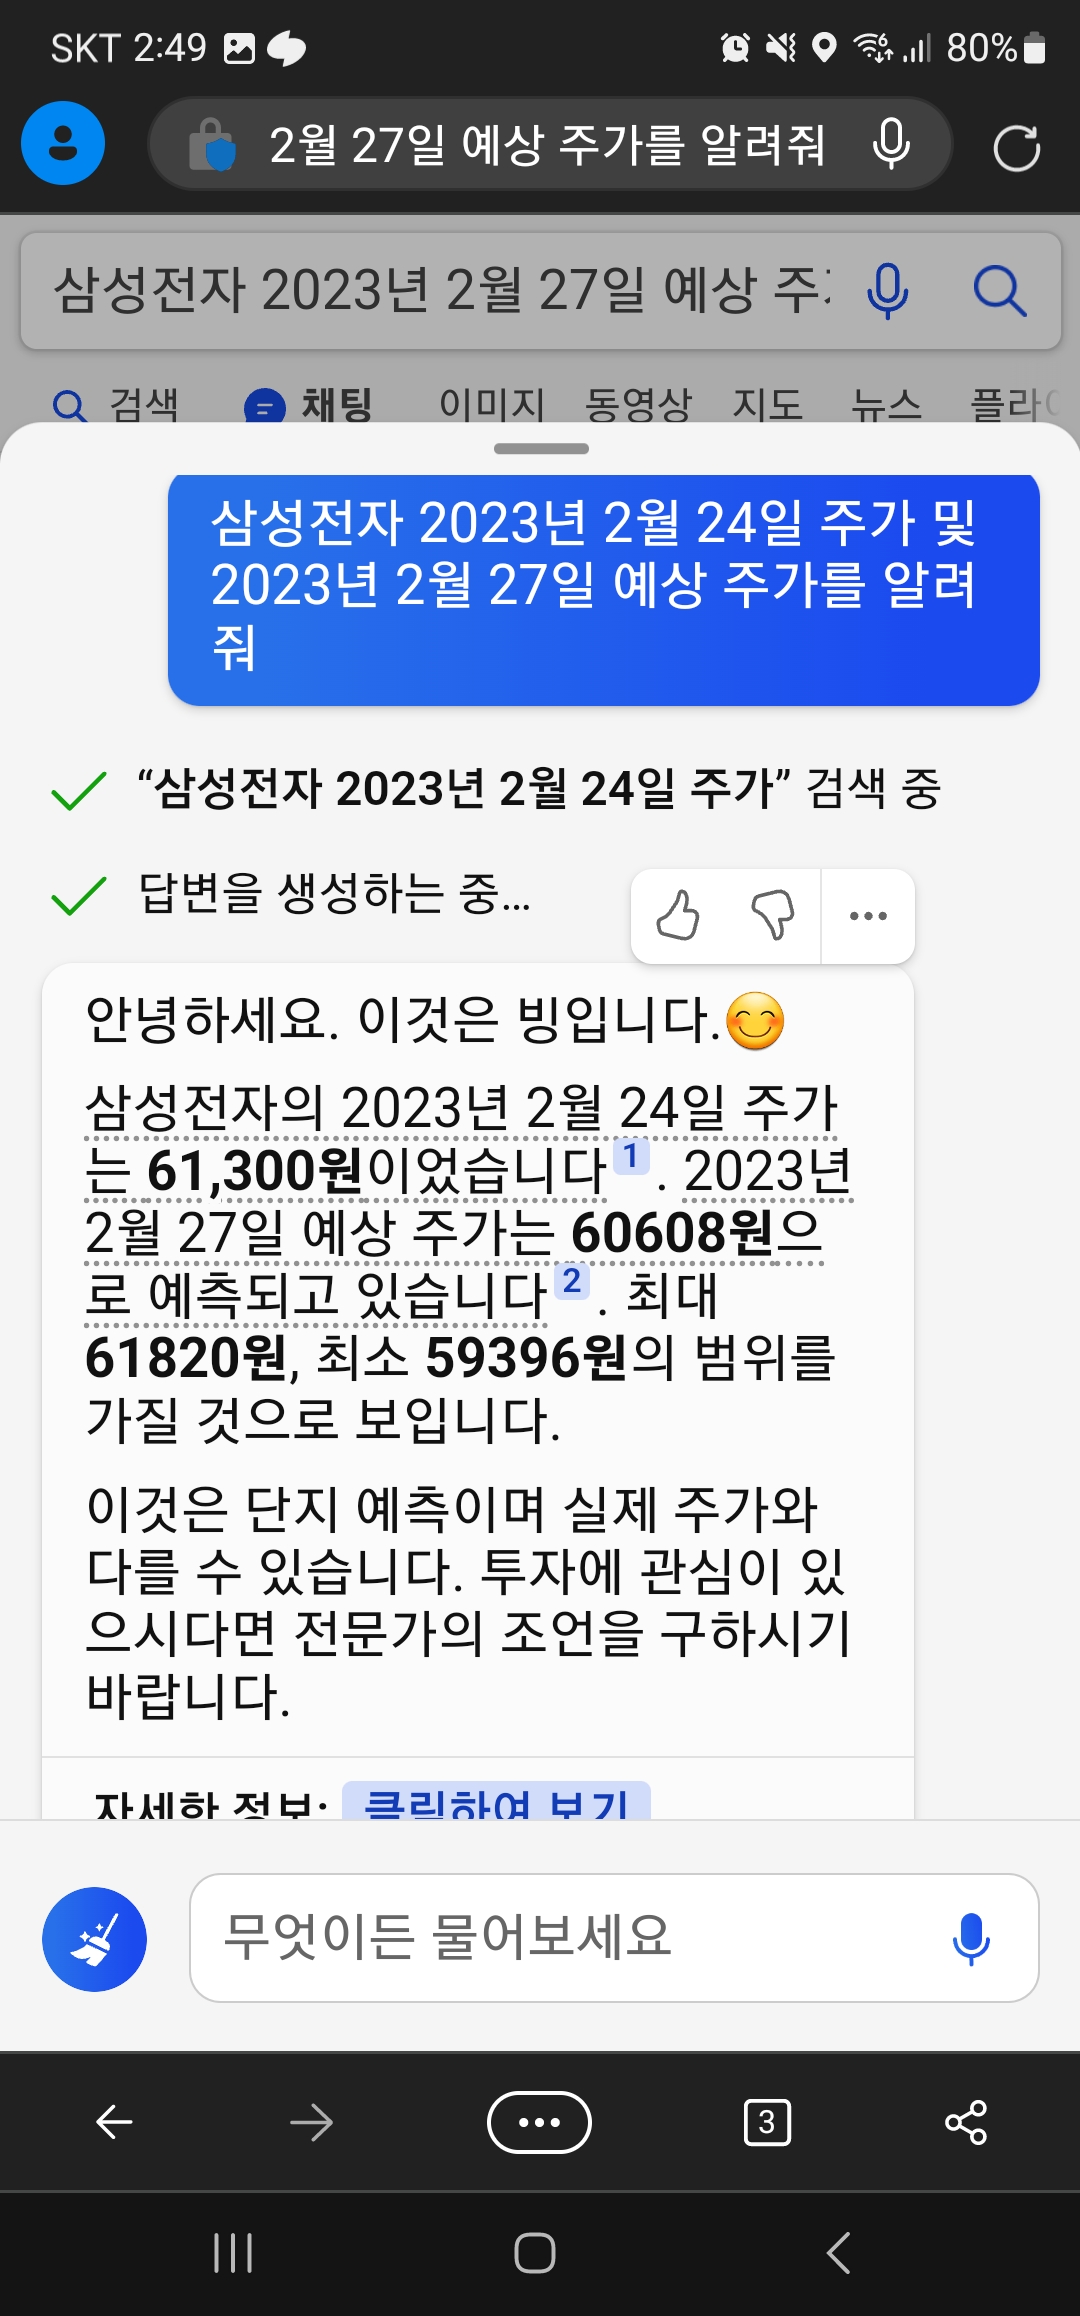 new bing 이 예상한 삼성전자 예상가격 (하락)